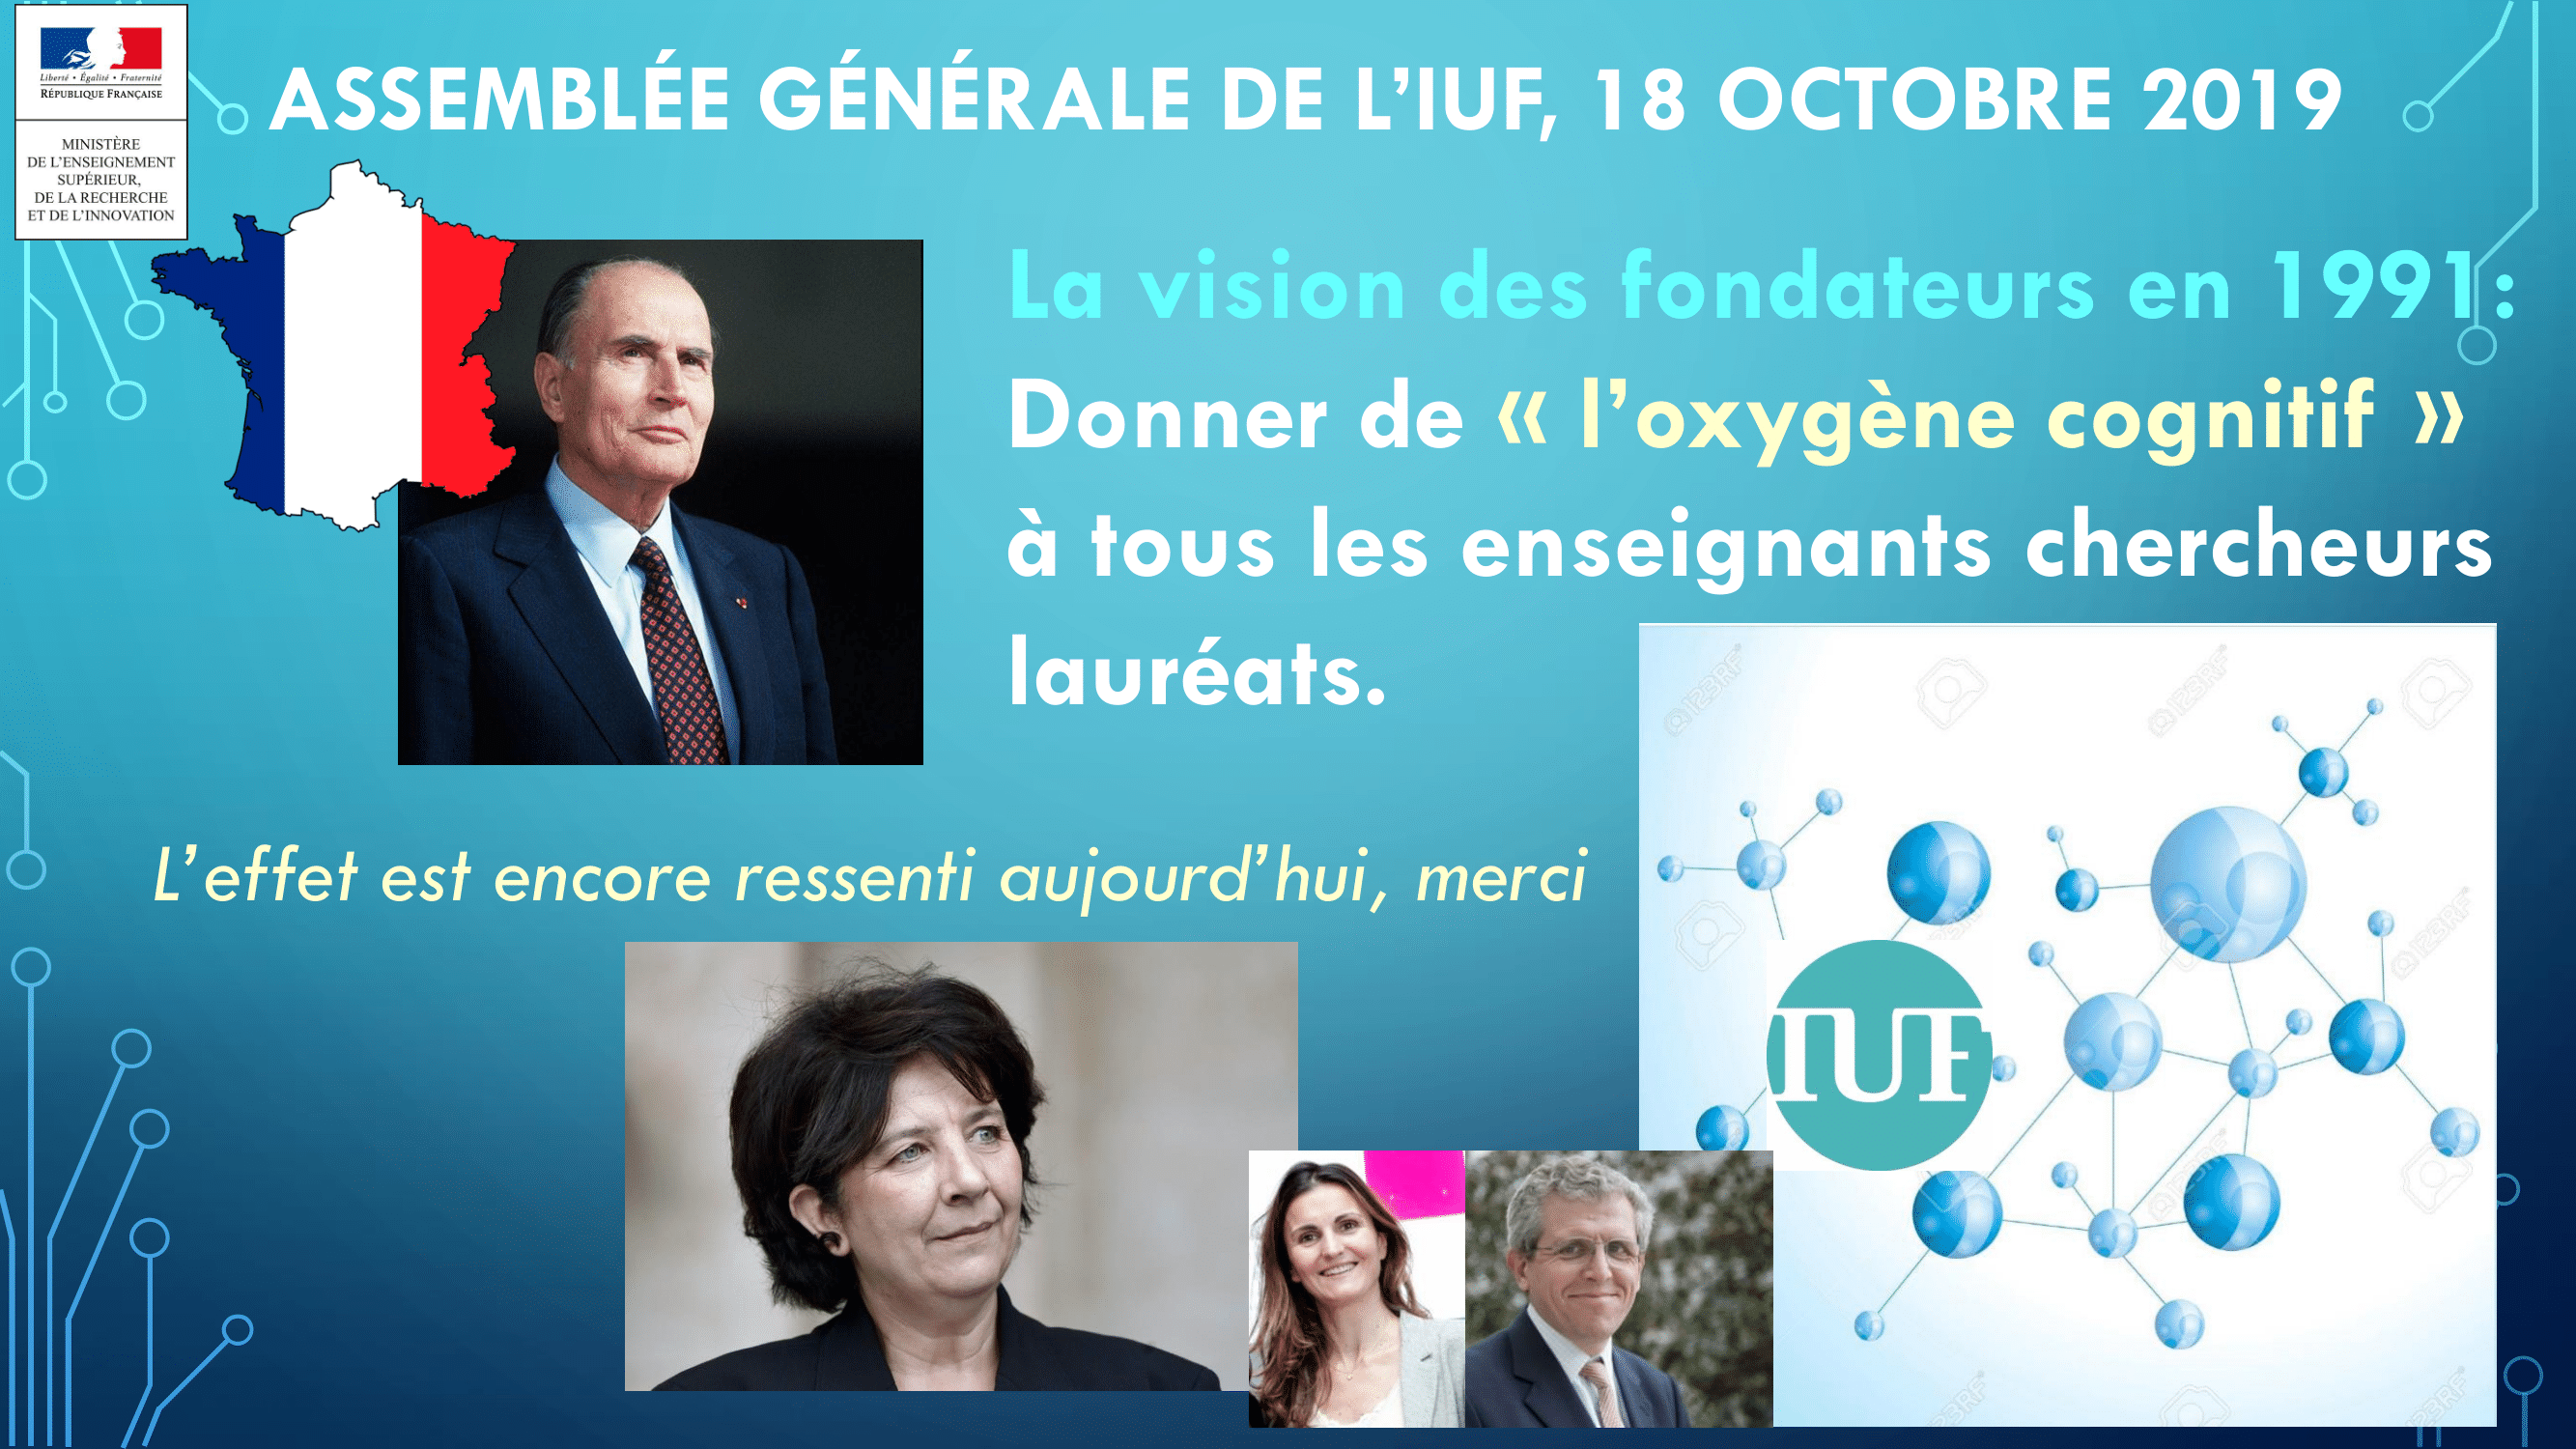 ASSEMBLEE GENERALE + CEREMONIE IUF 2019-18-Oct-10.png